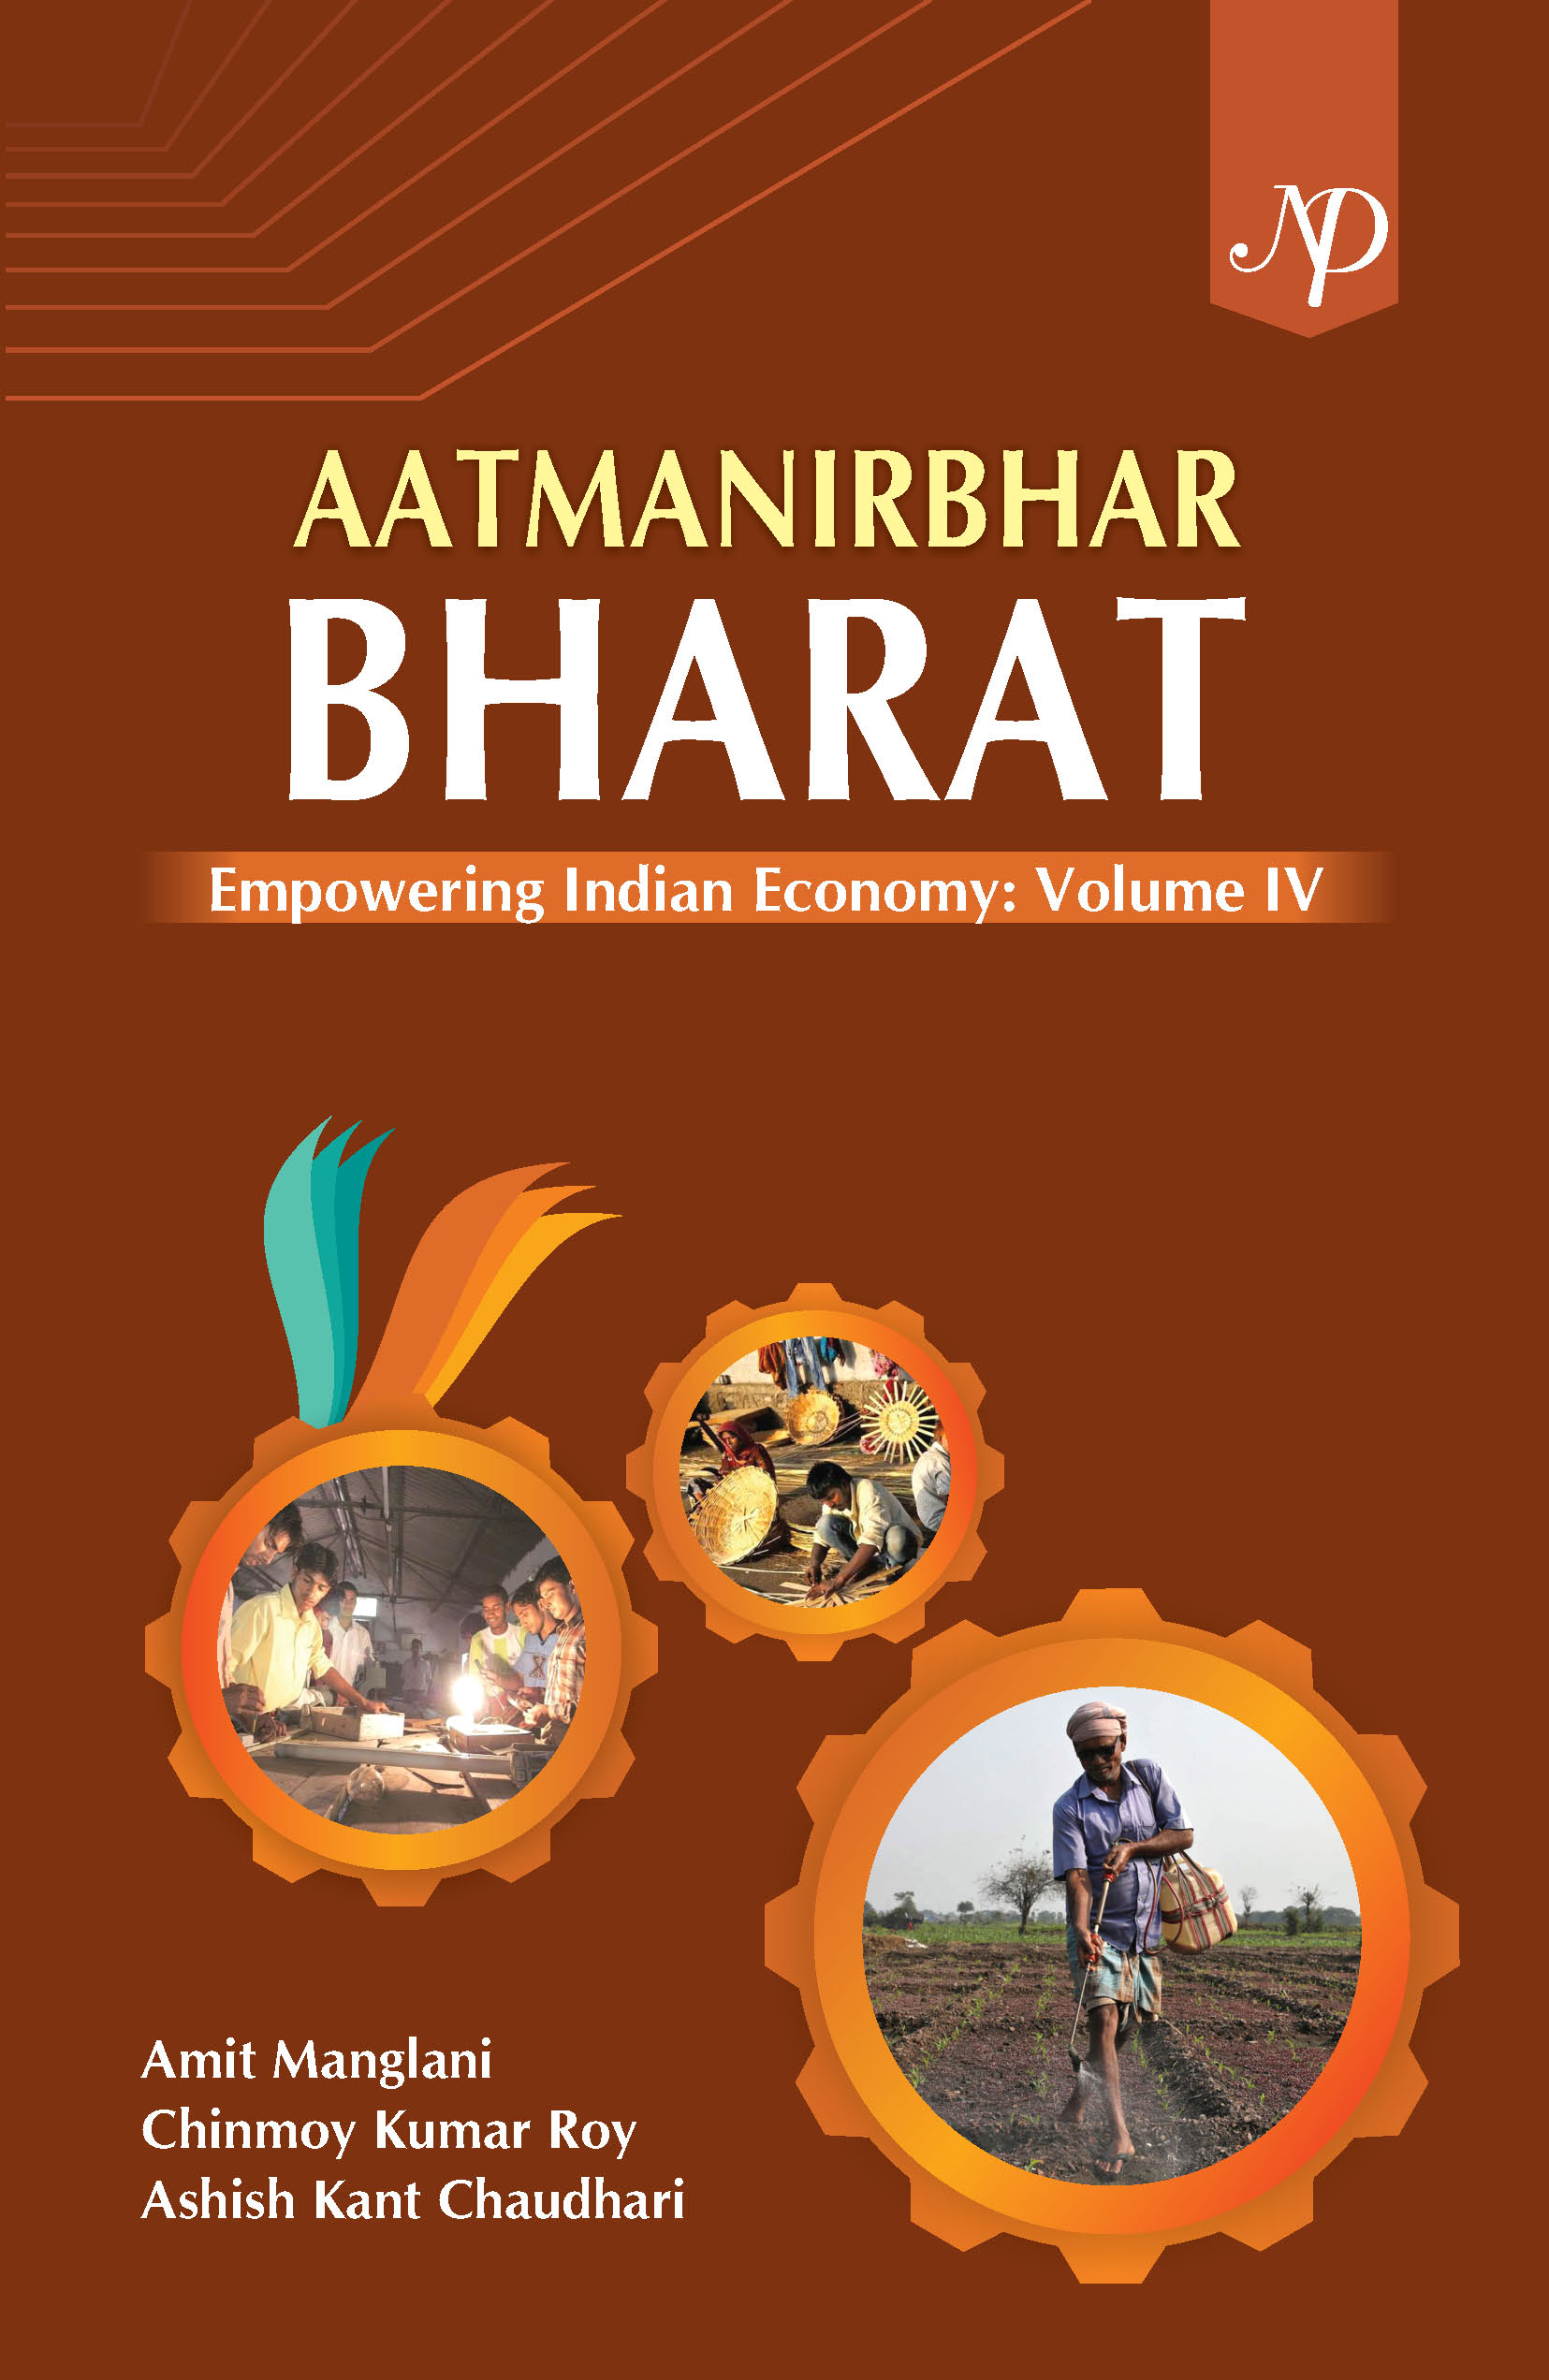 Aatmanirbhar Bharat: Empowering Indian Economy Volume IV